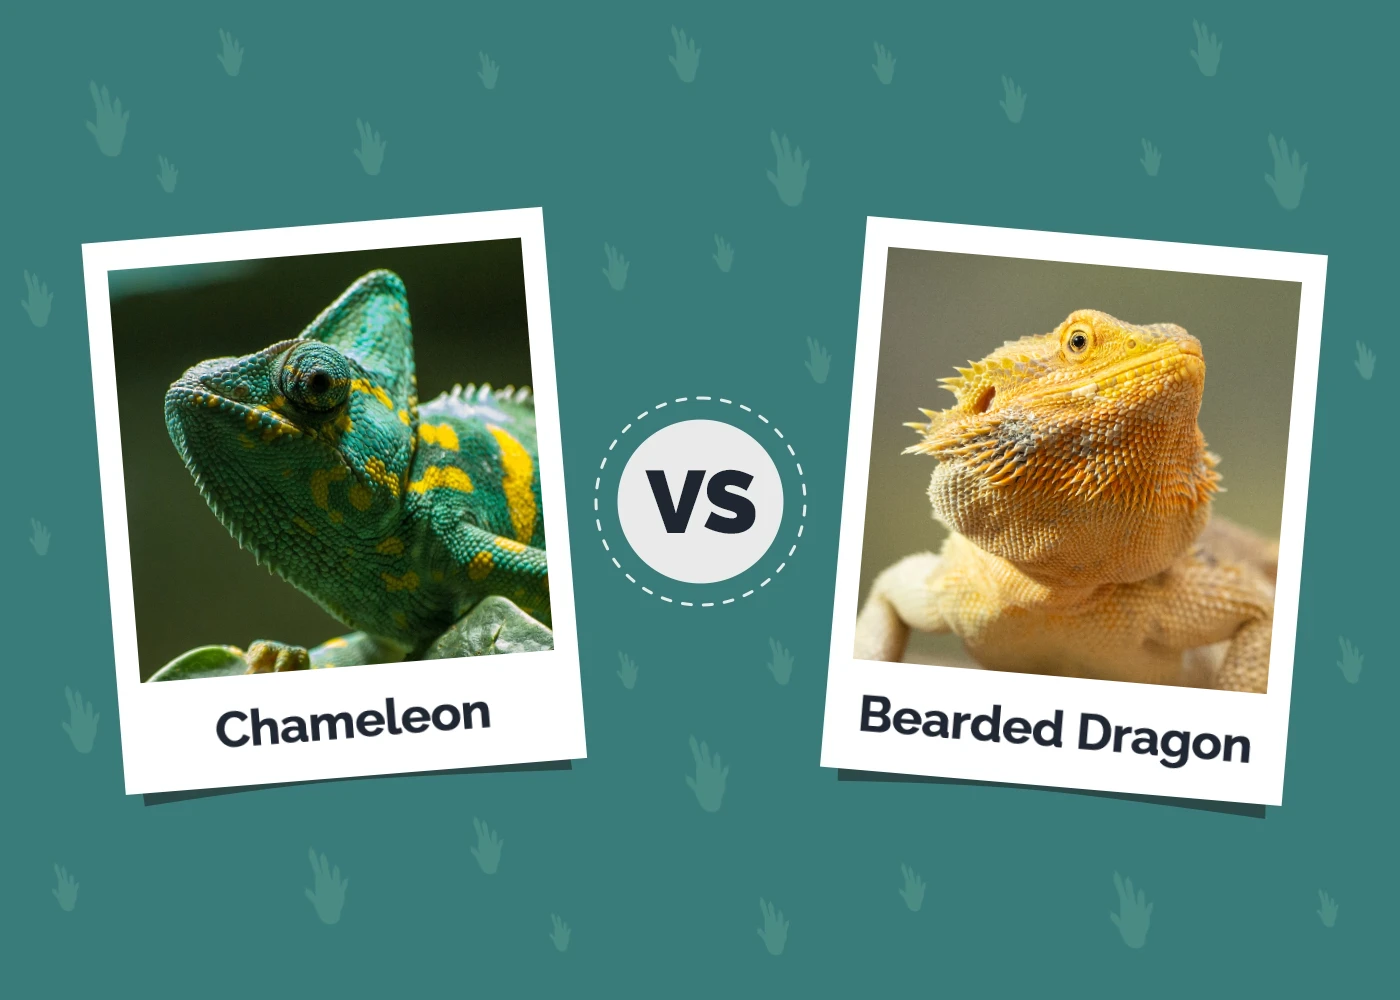 Chameleon vs Bearded Dragon - Featured Image